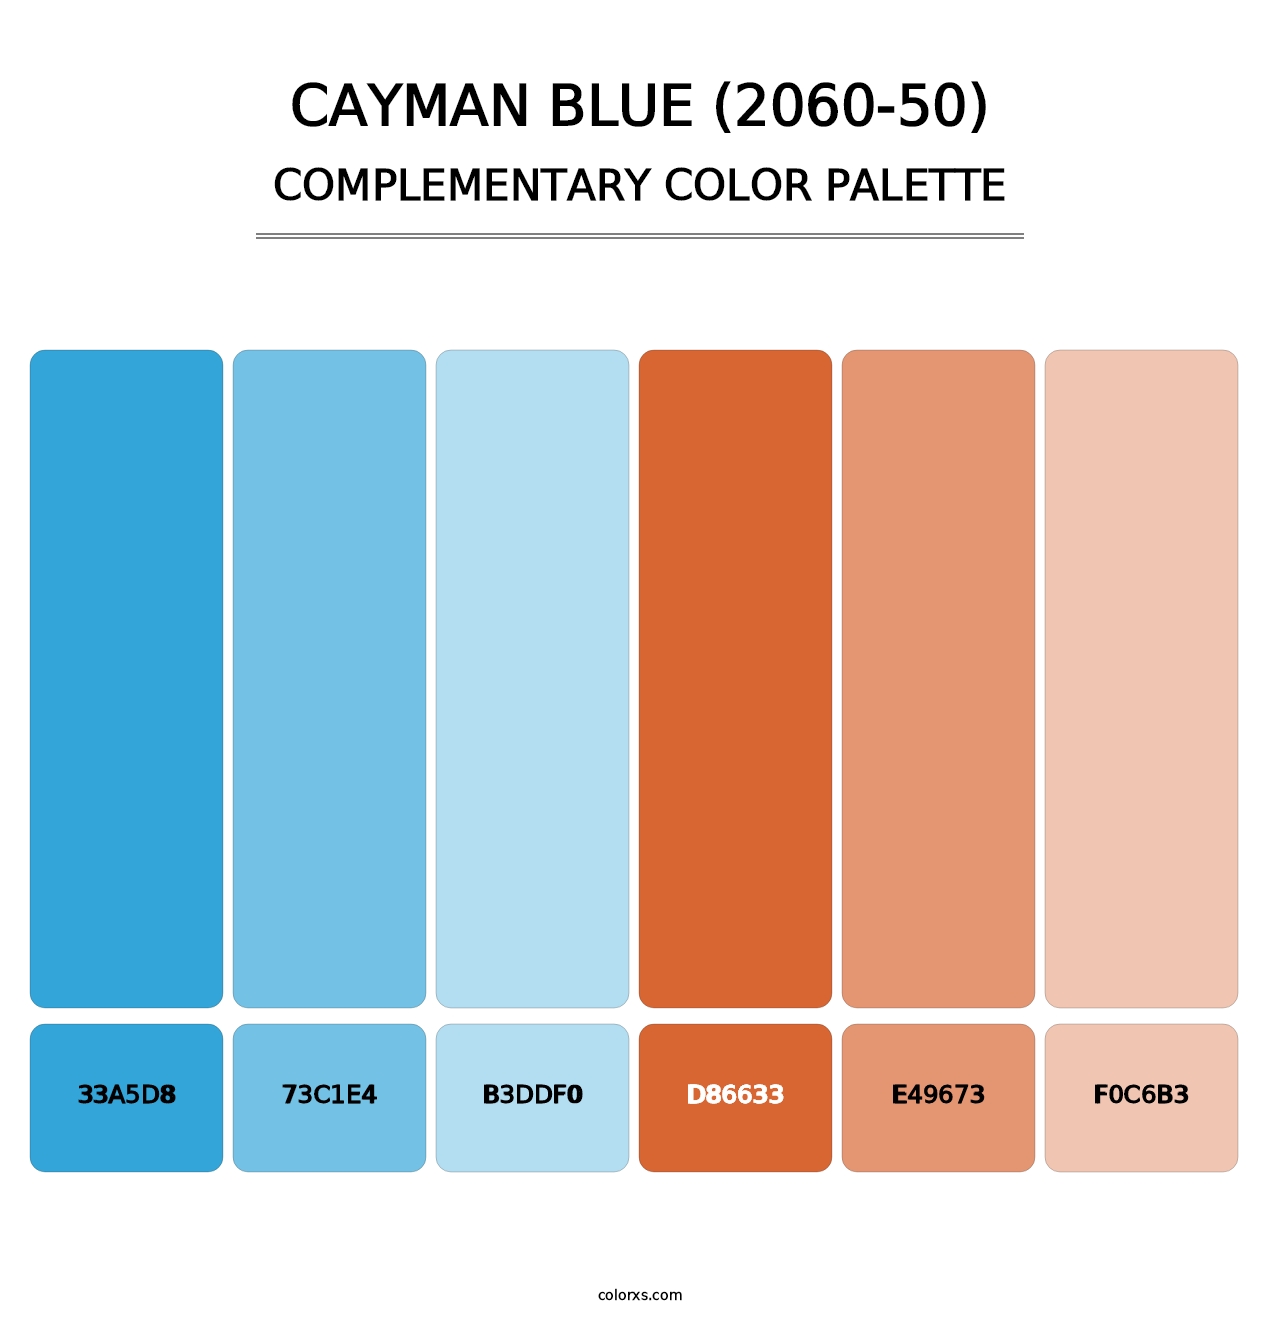 Cayman Blue (2060-50) - Complementary Color Palette